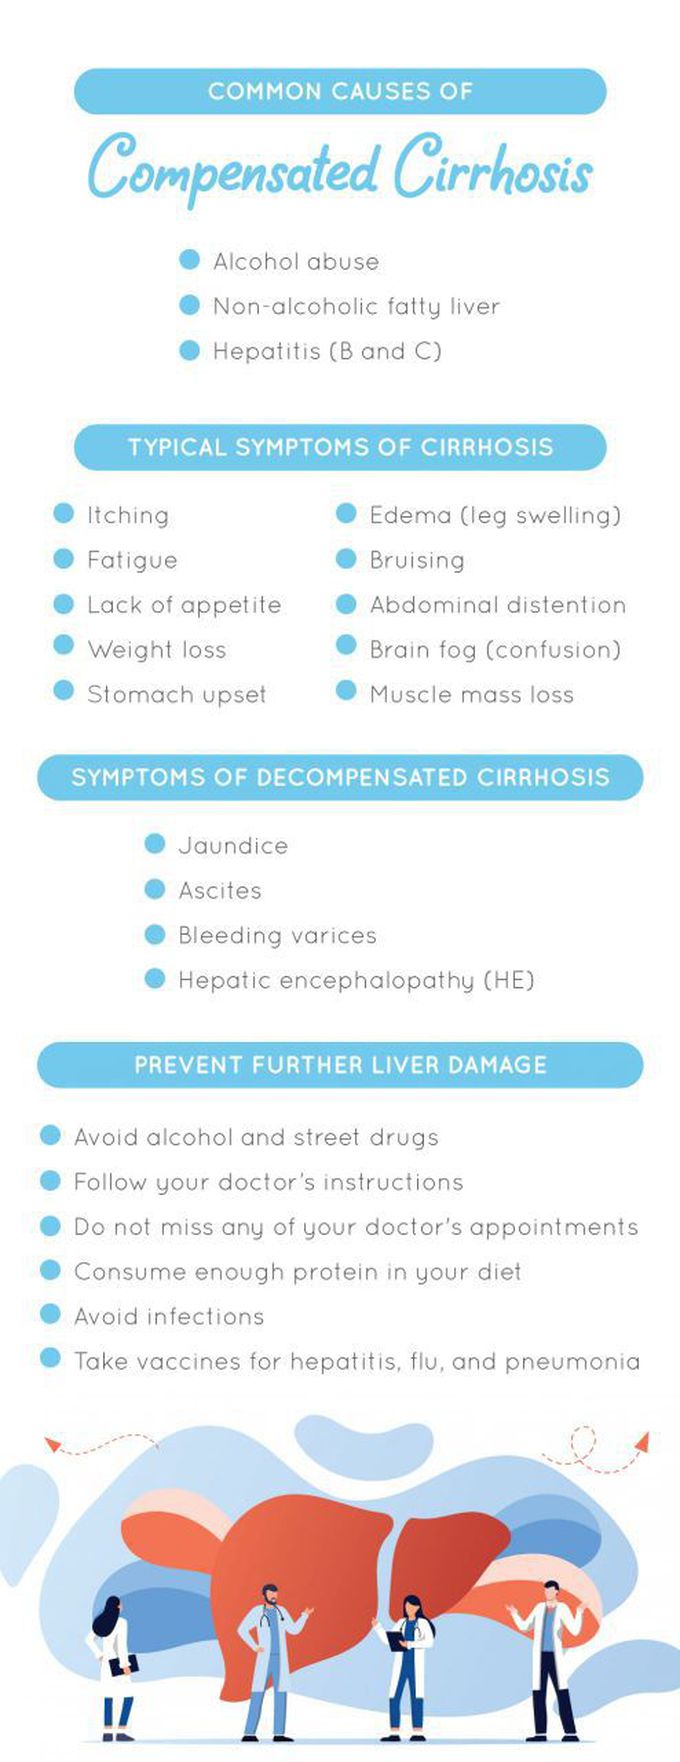 Symptoms of compensated cirrhosis